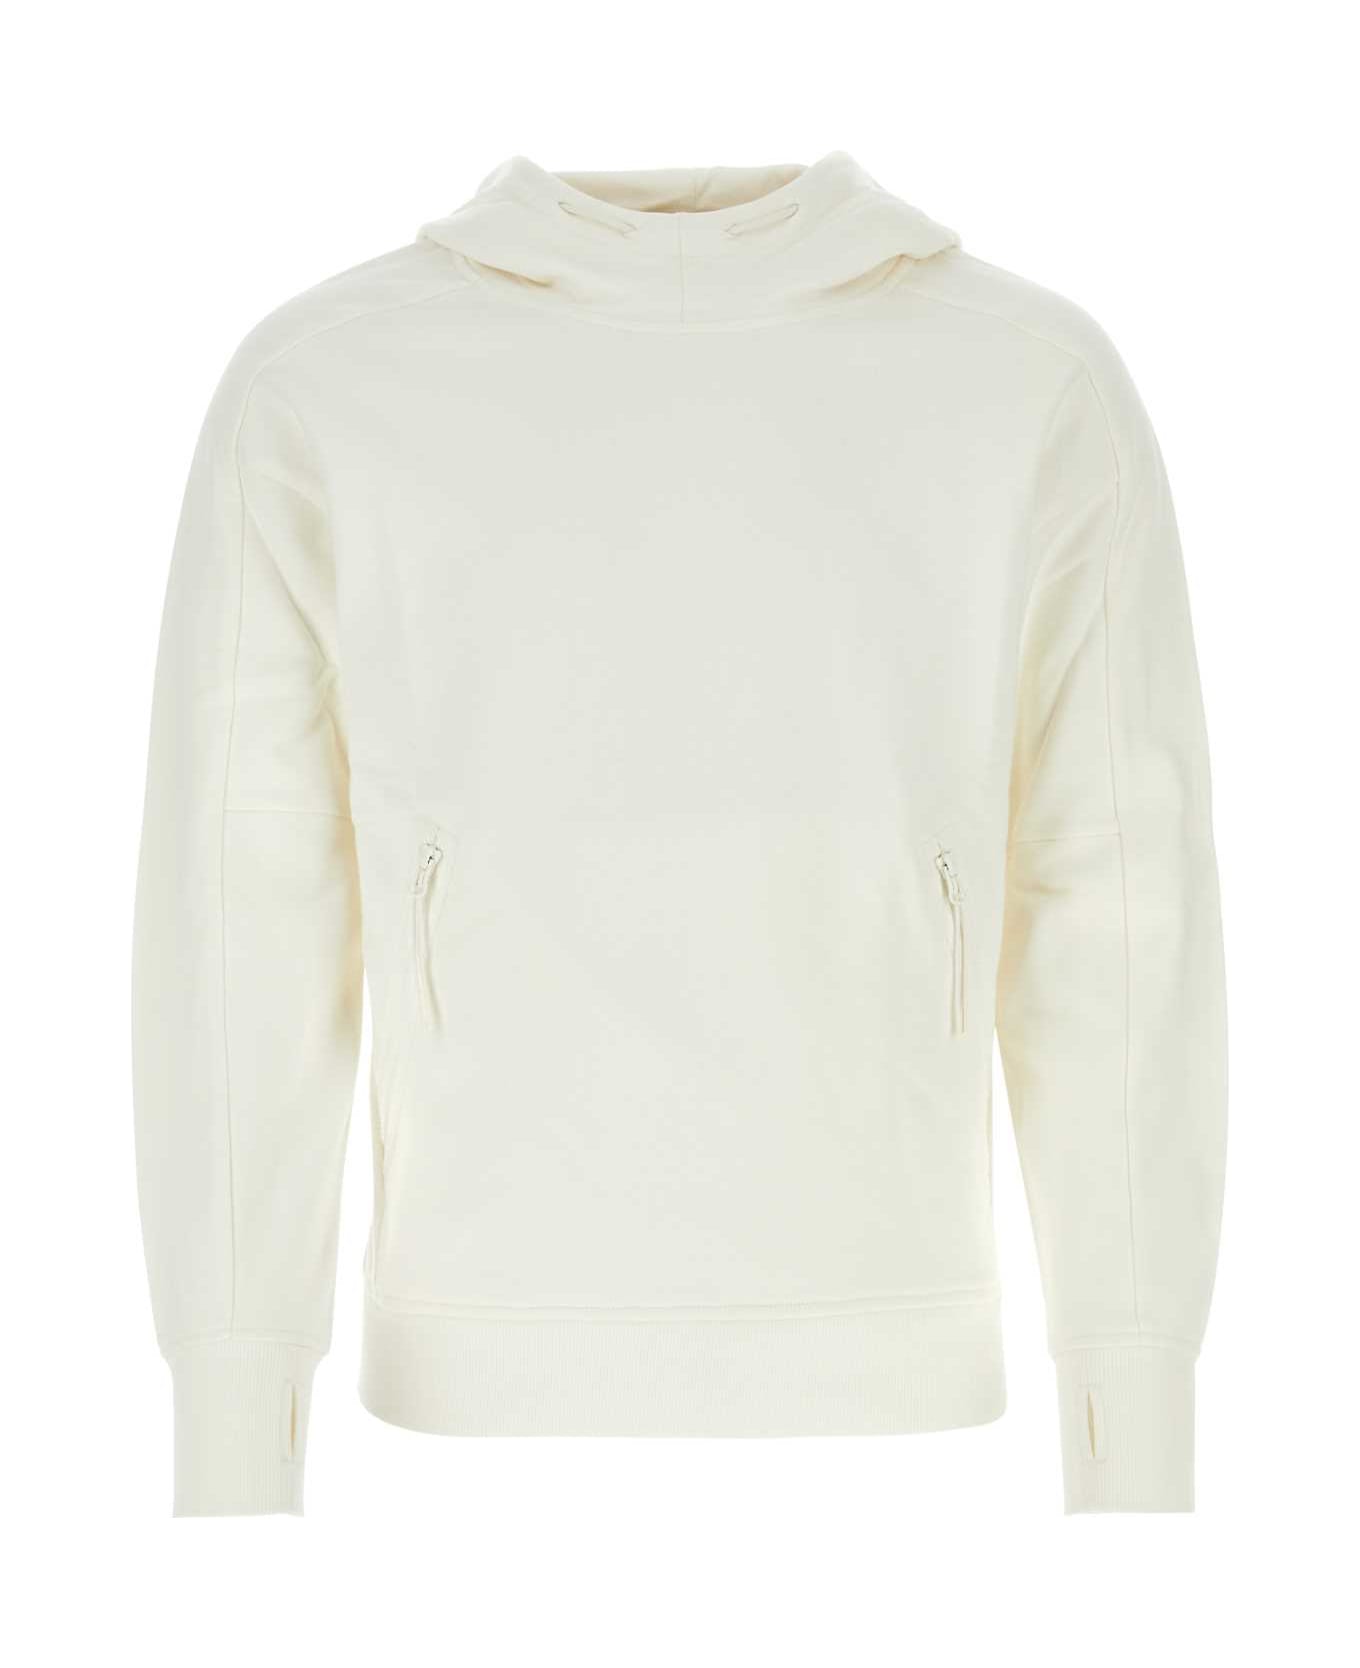 C.P. Company White Cotton Sweatshirt - GAUZEWHITE フリース